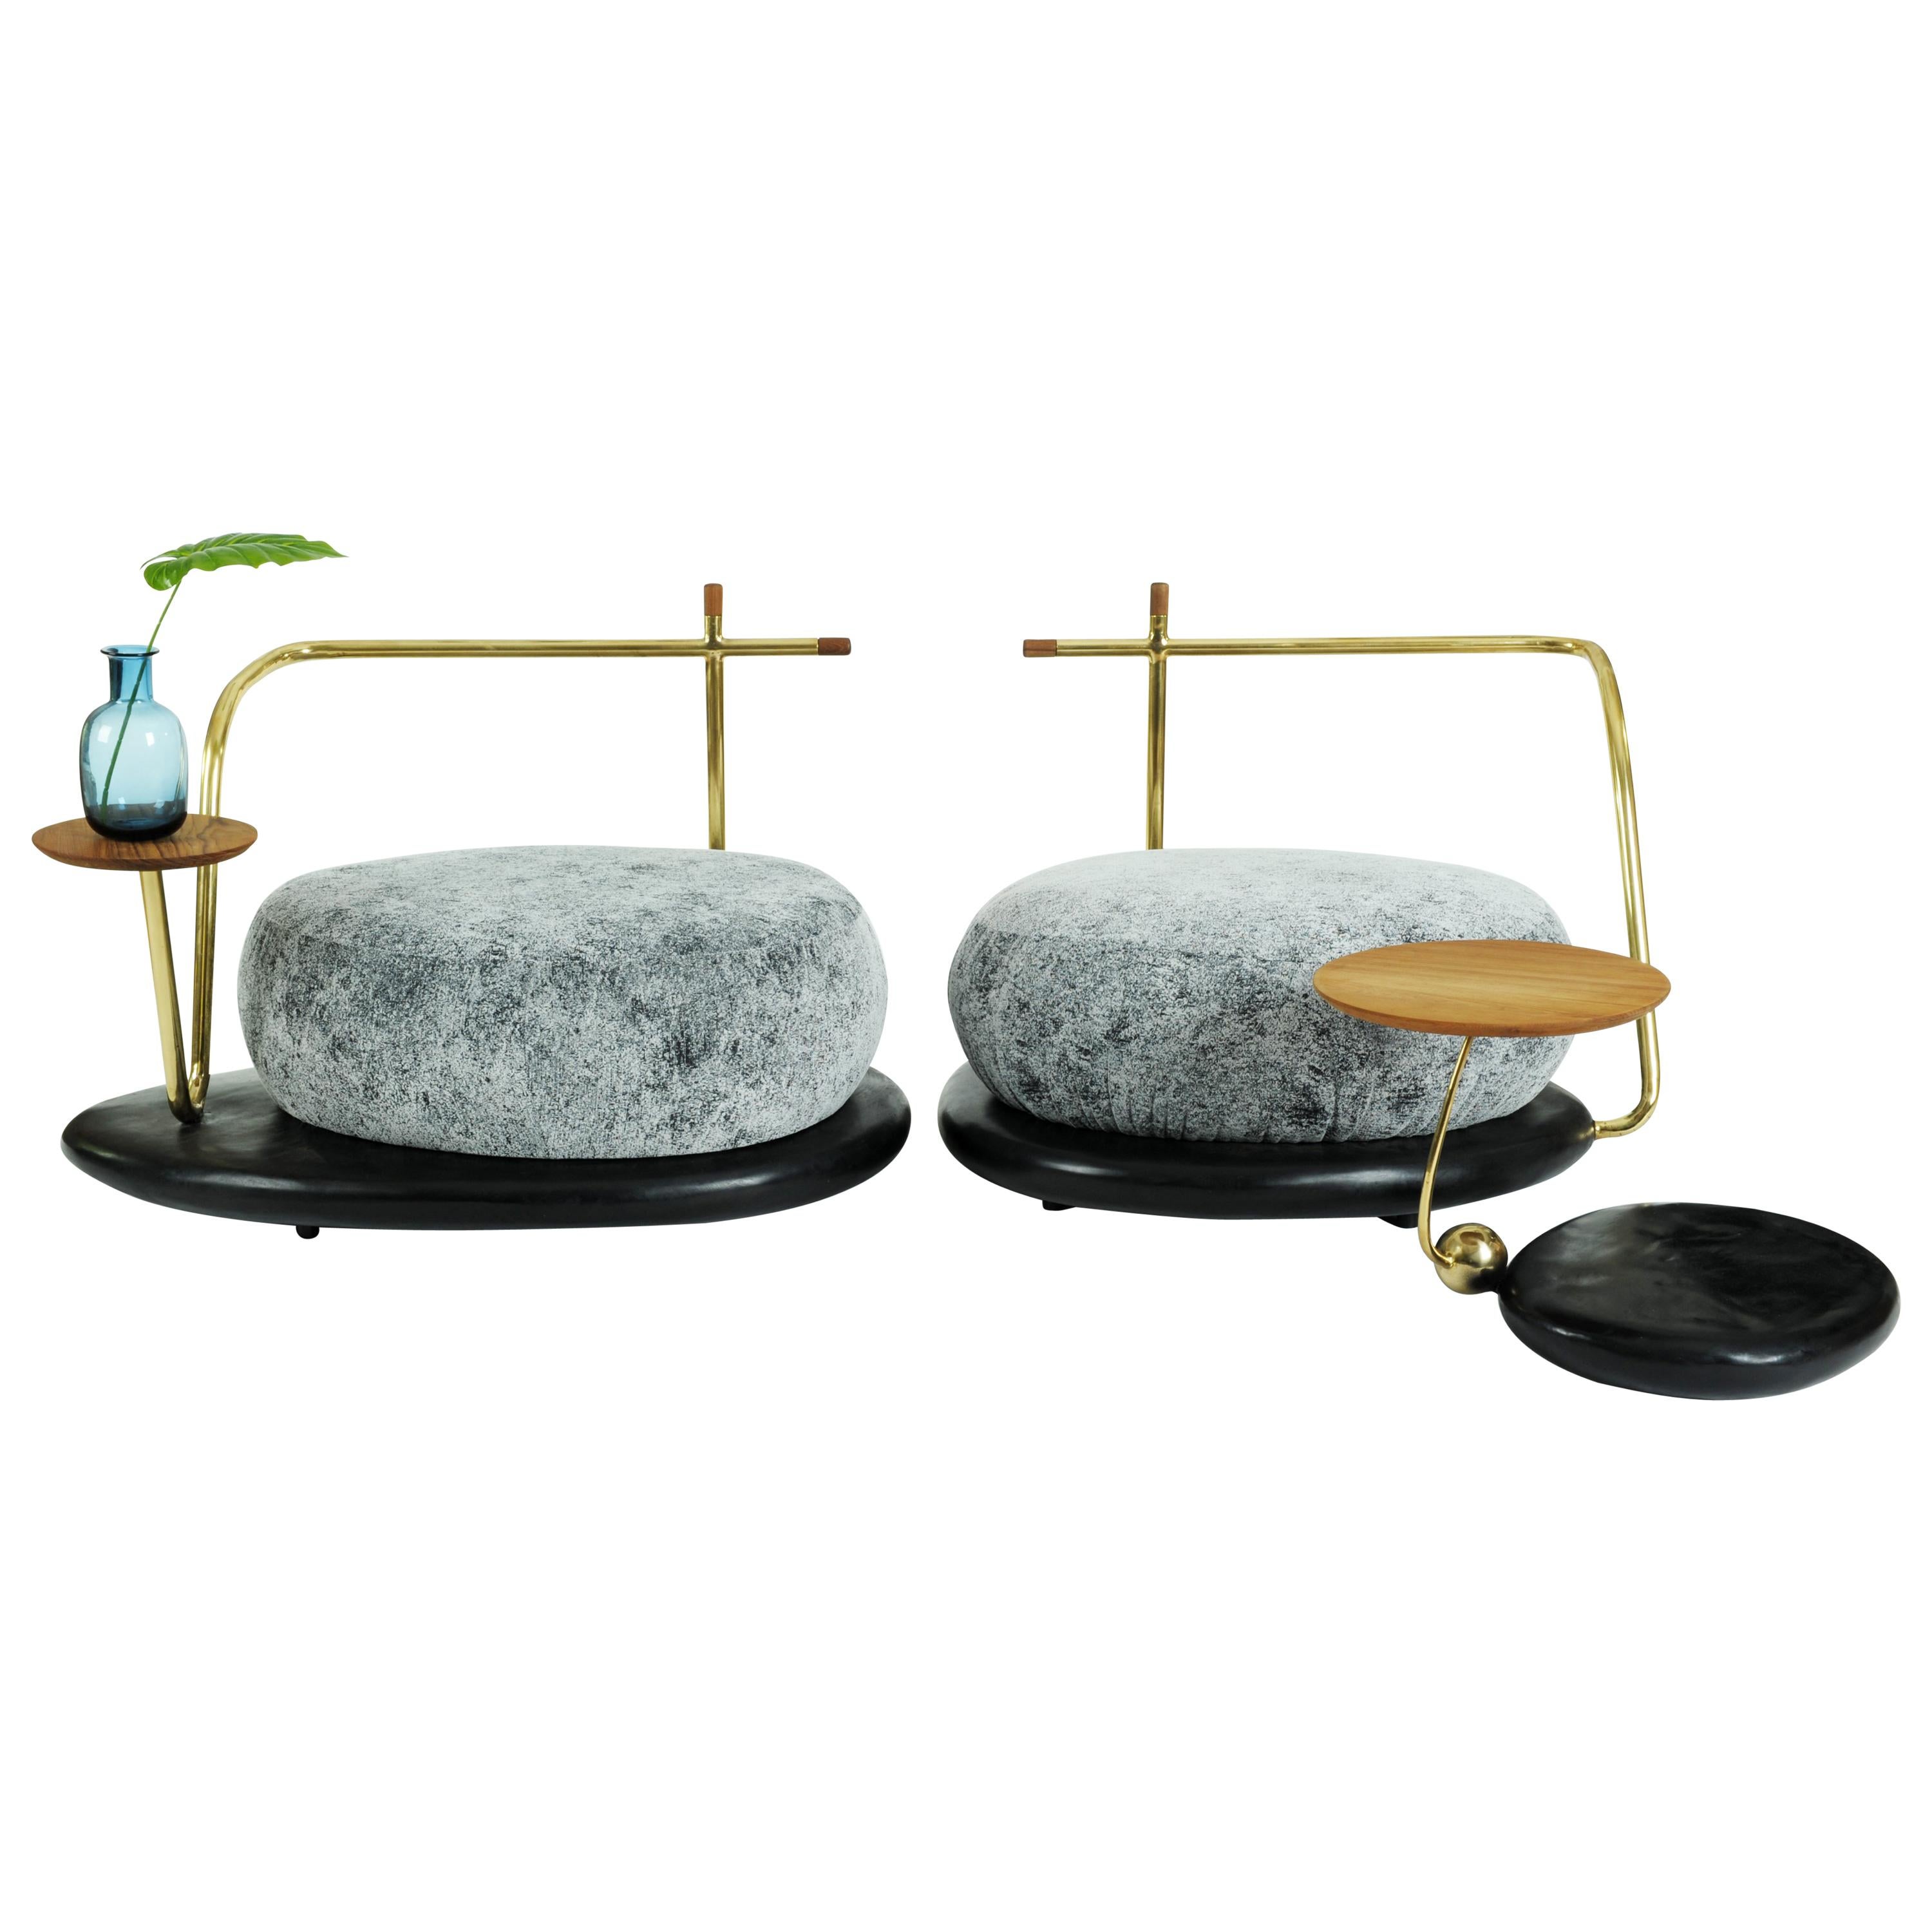 Ensemble of Grey Zen Pouffes and coffee table - Misaya
Hand-sculpted Pouffe
Materials: Brass, teak, wood.
Dimensions:
A. 106 x 68 x 72 cm
B. 90 x 72 x 72 cm.
Table: 38 x 48 x 38 cm.
 